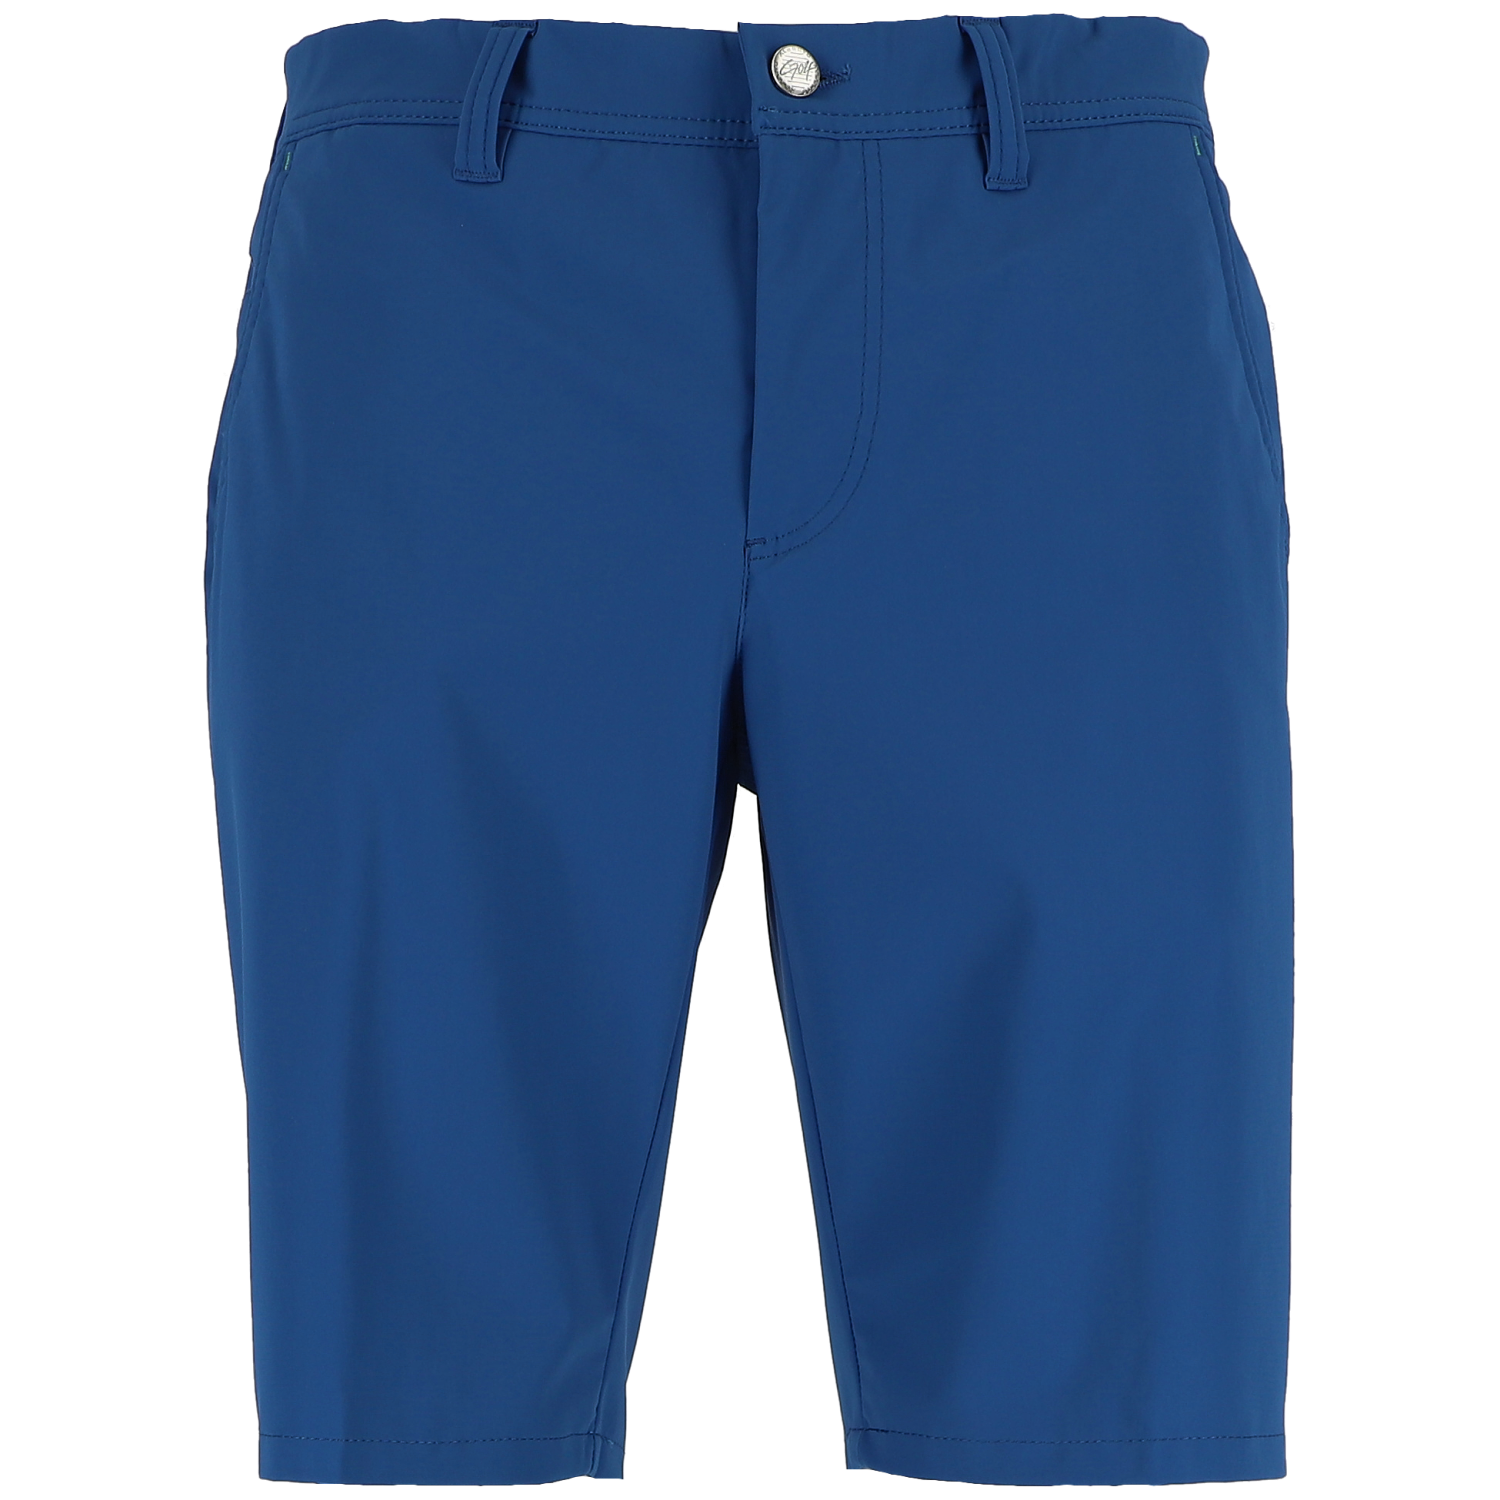 Alberto Earnie Wr Revolutional Shorts Blue